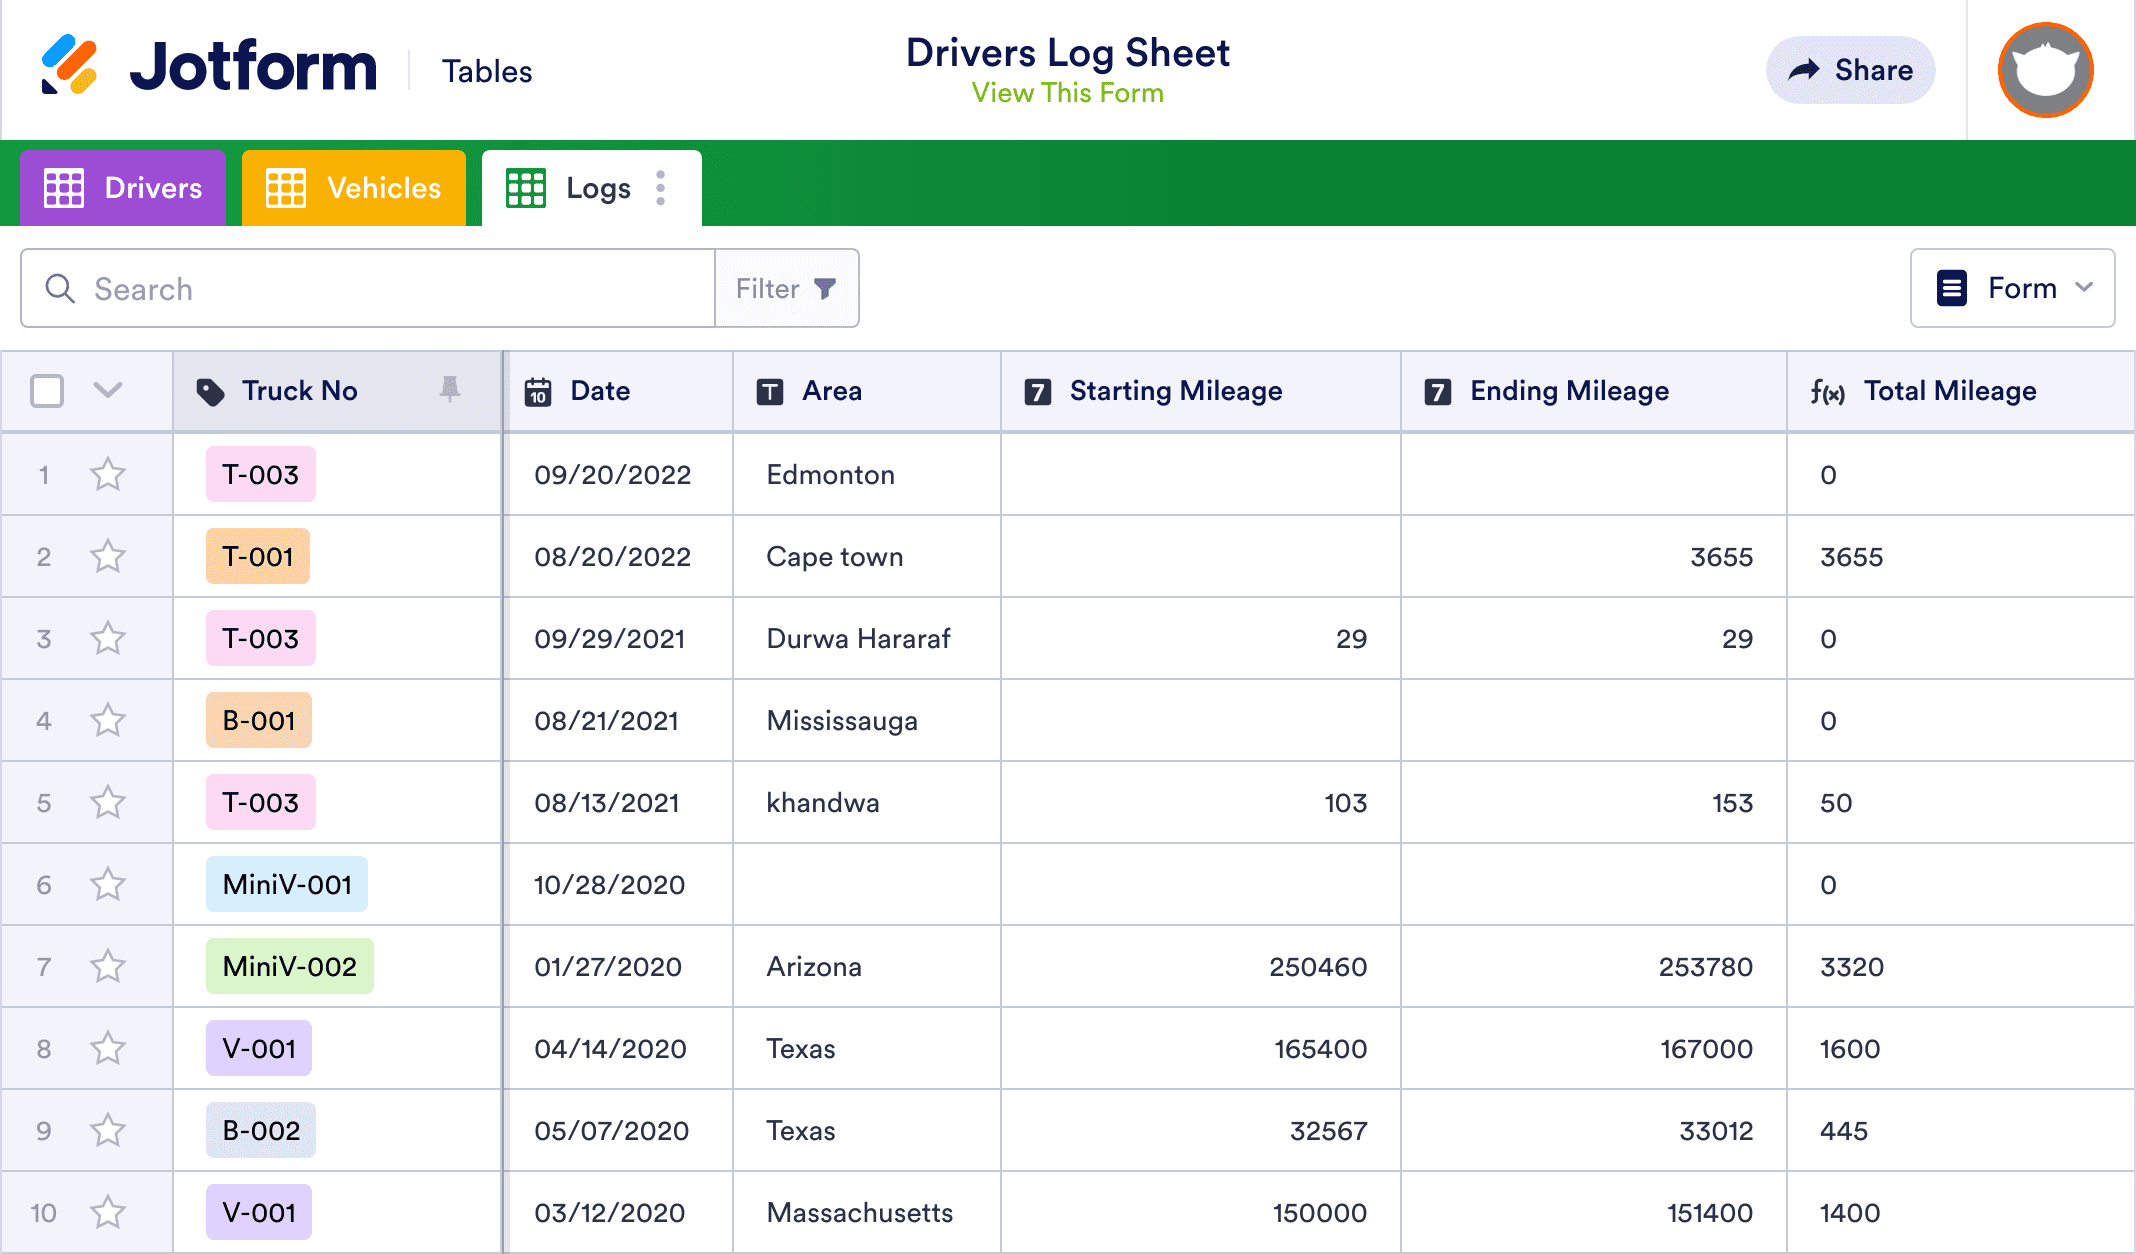 Drivers Log Sheet